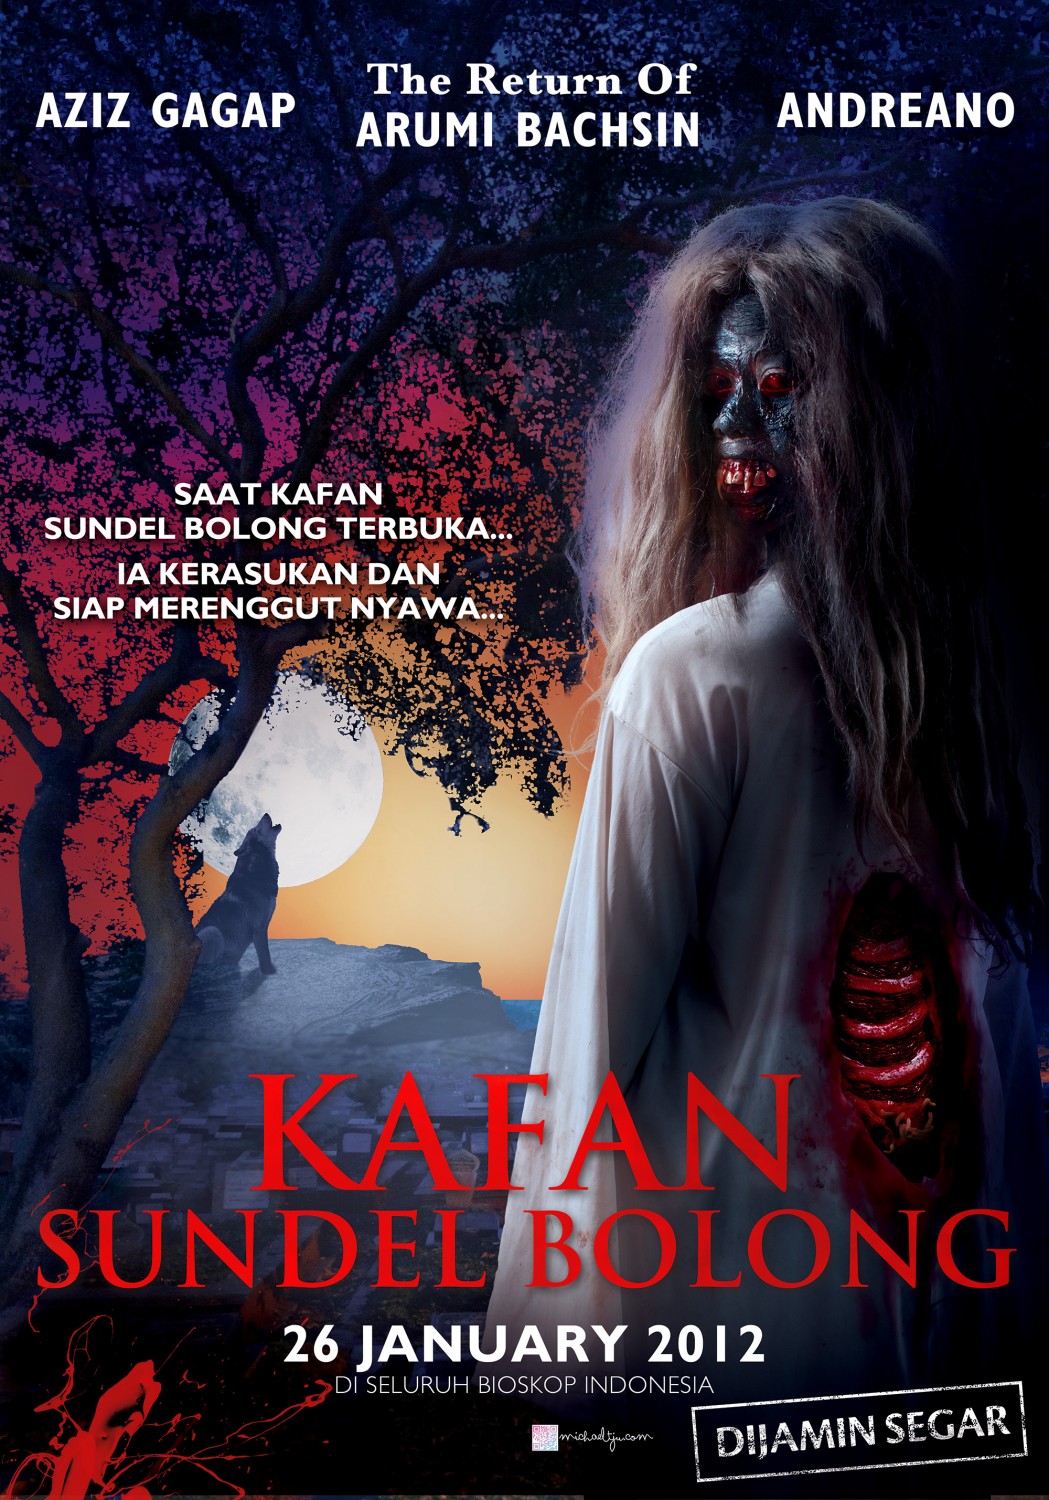 Extra Large Movie Poster Image for Kafan sundel bolong 